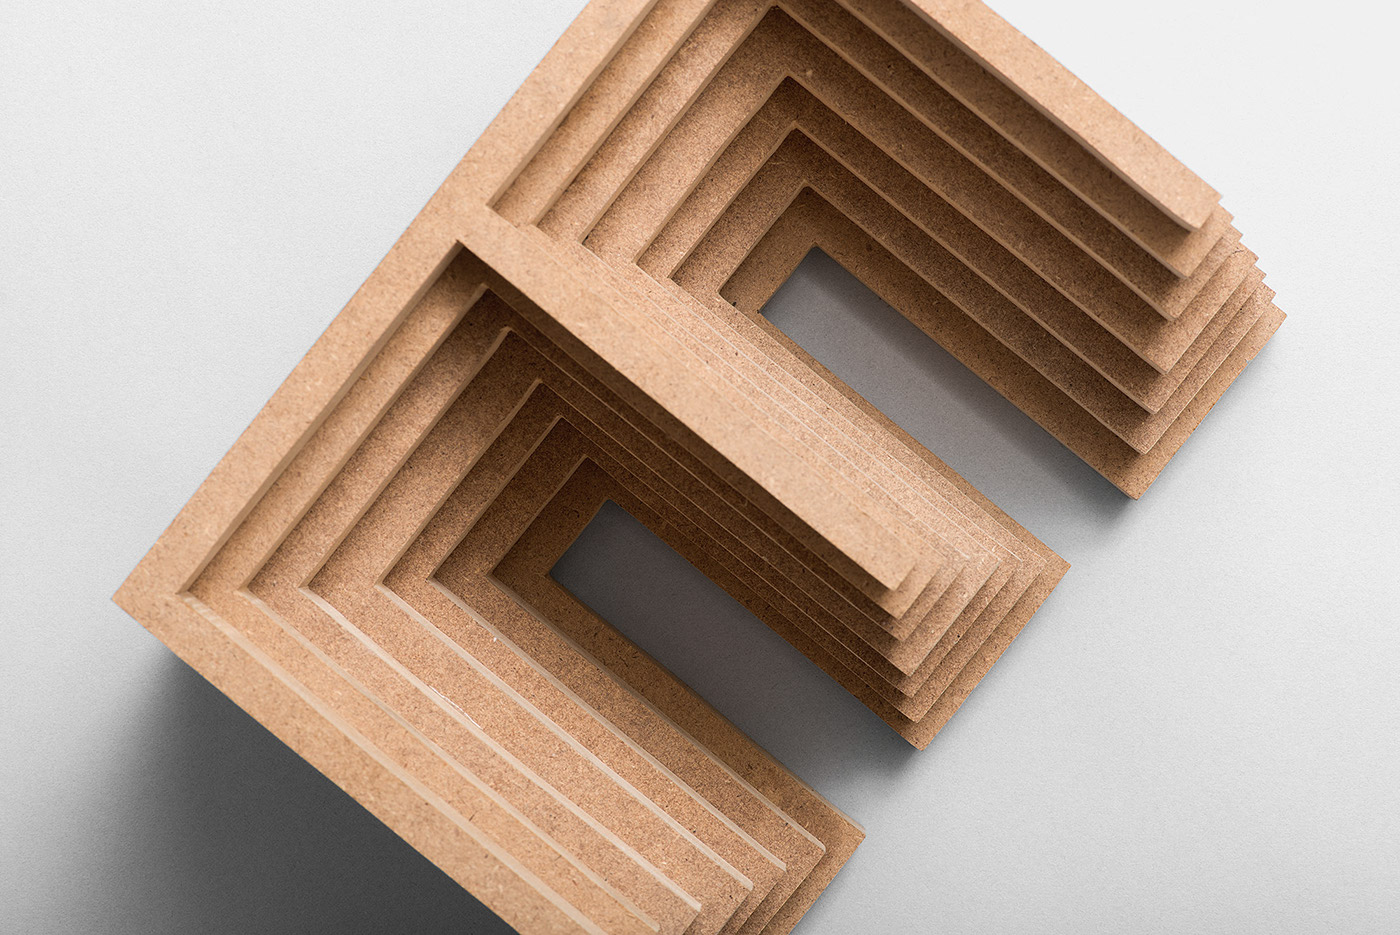 mdf wood SAW proxima fontweight Bookend scroll saw handmade manual three-dimensional